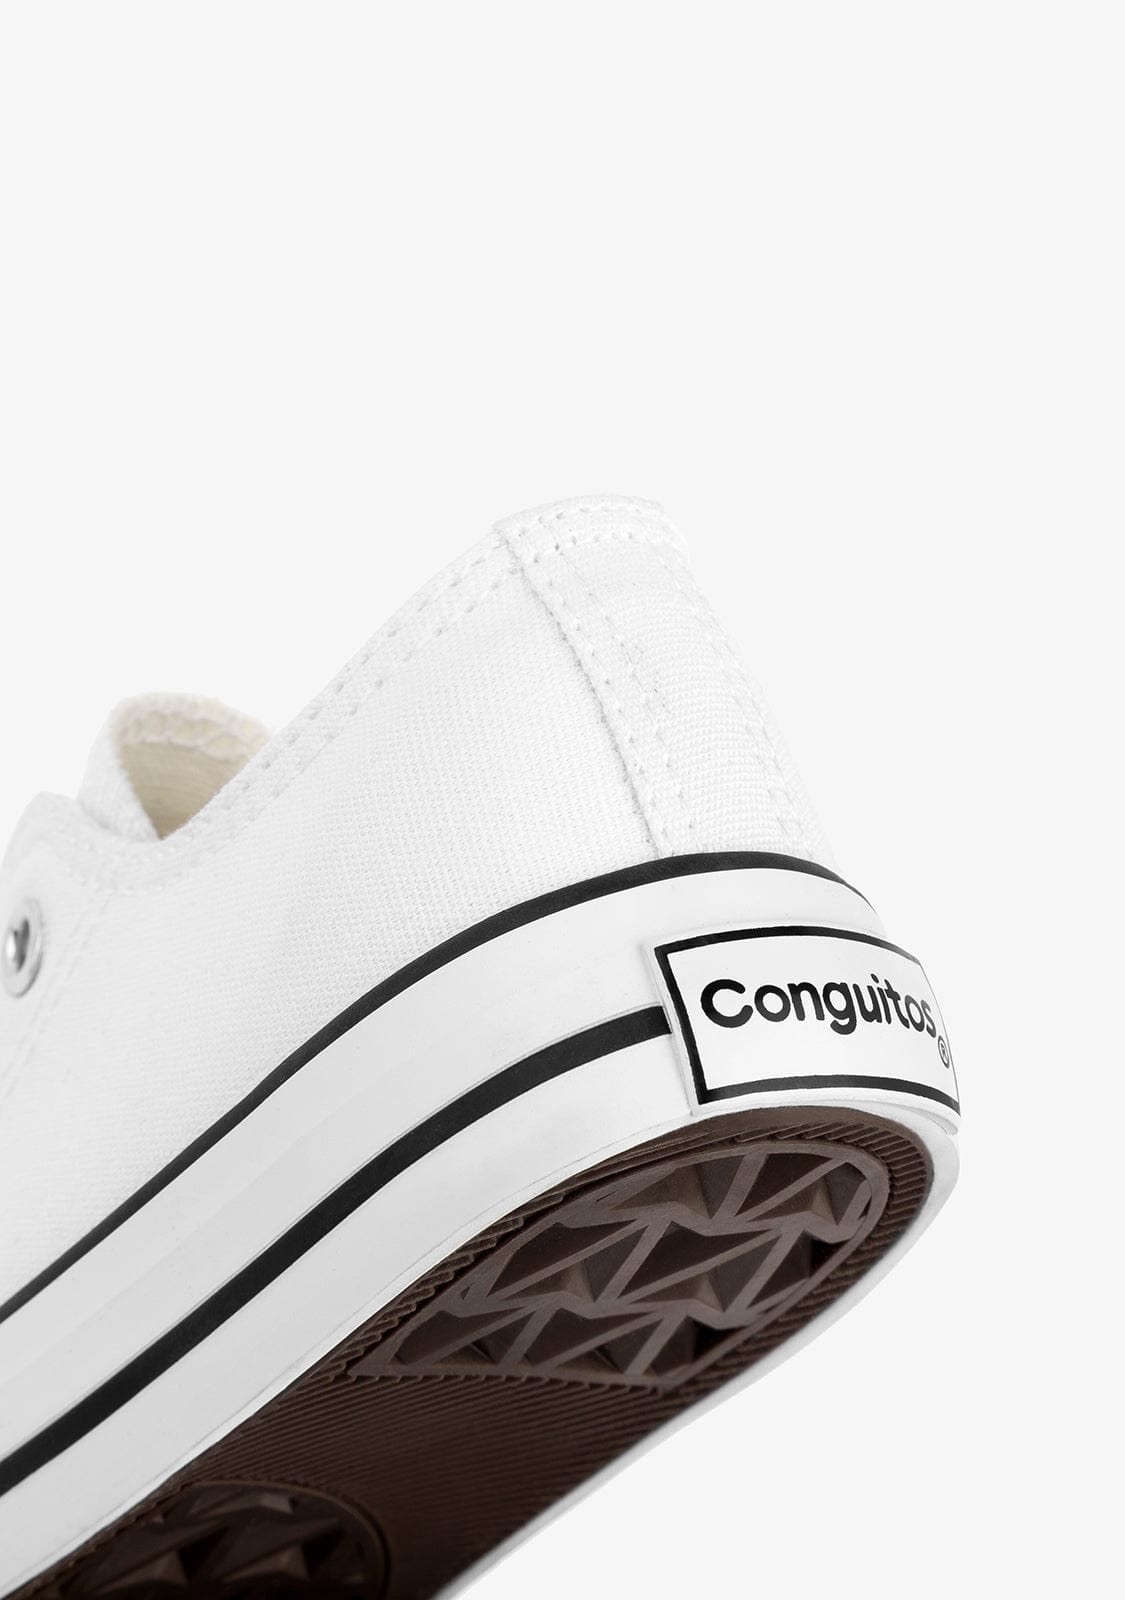 CONGUITOS Shoes Unisex White Basic Sneakers Canvas